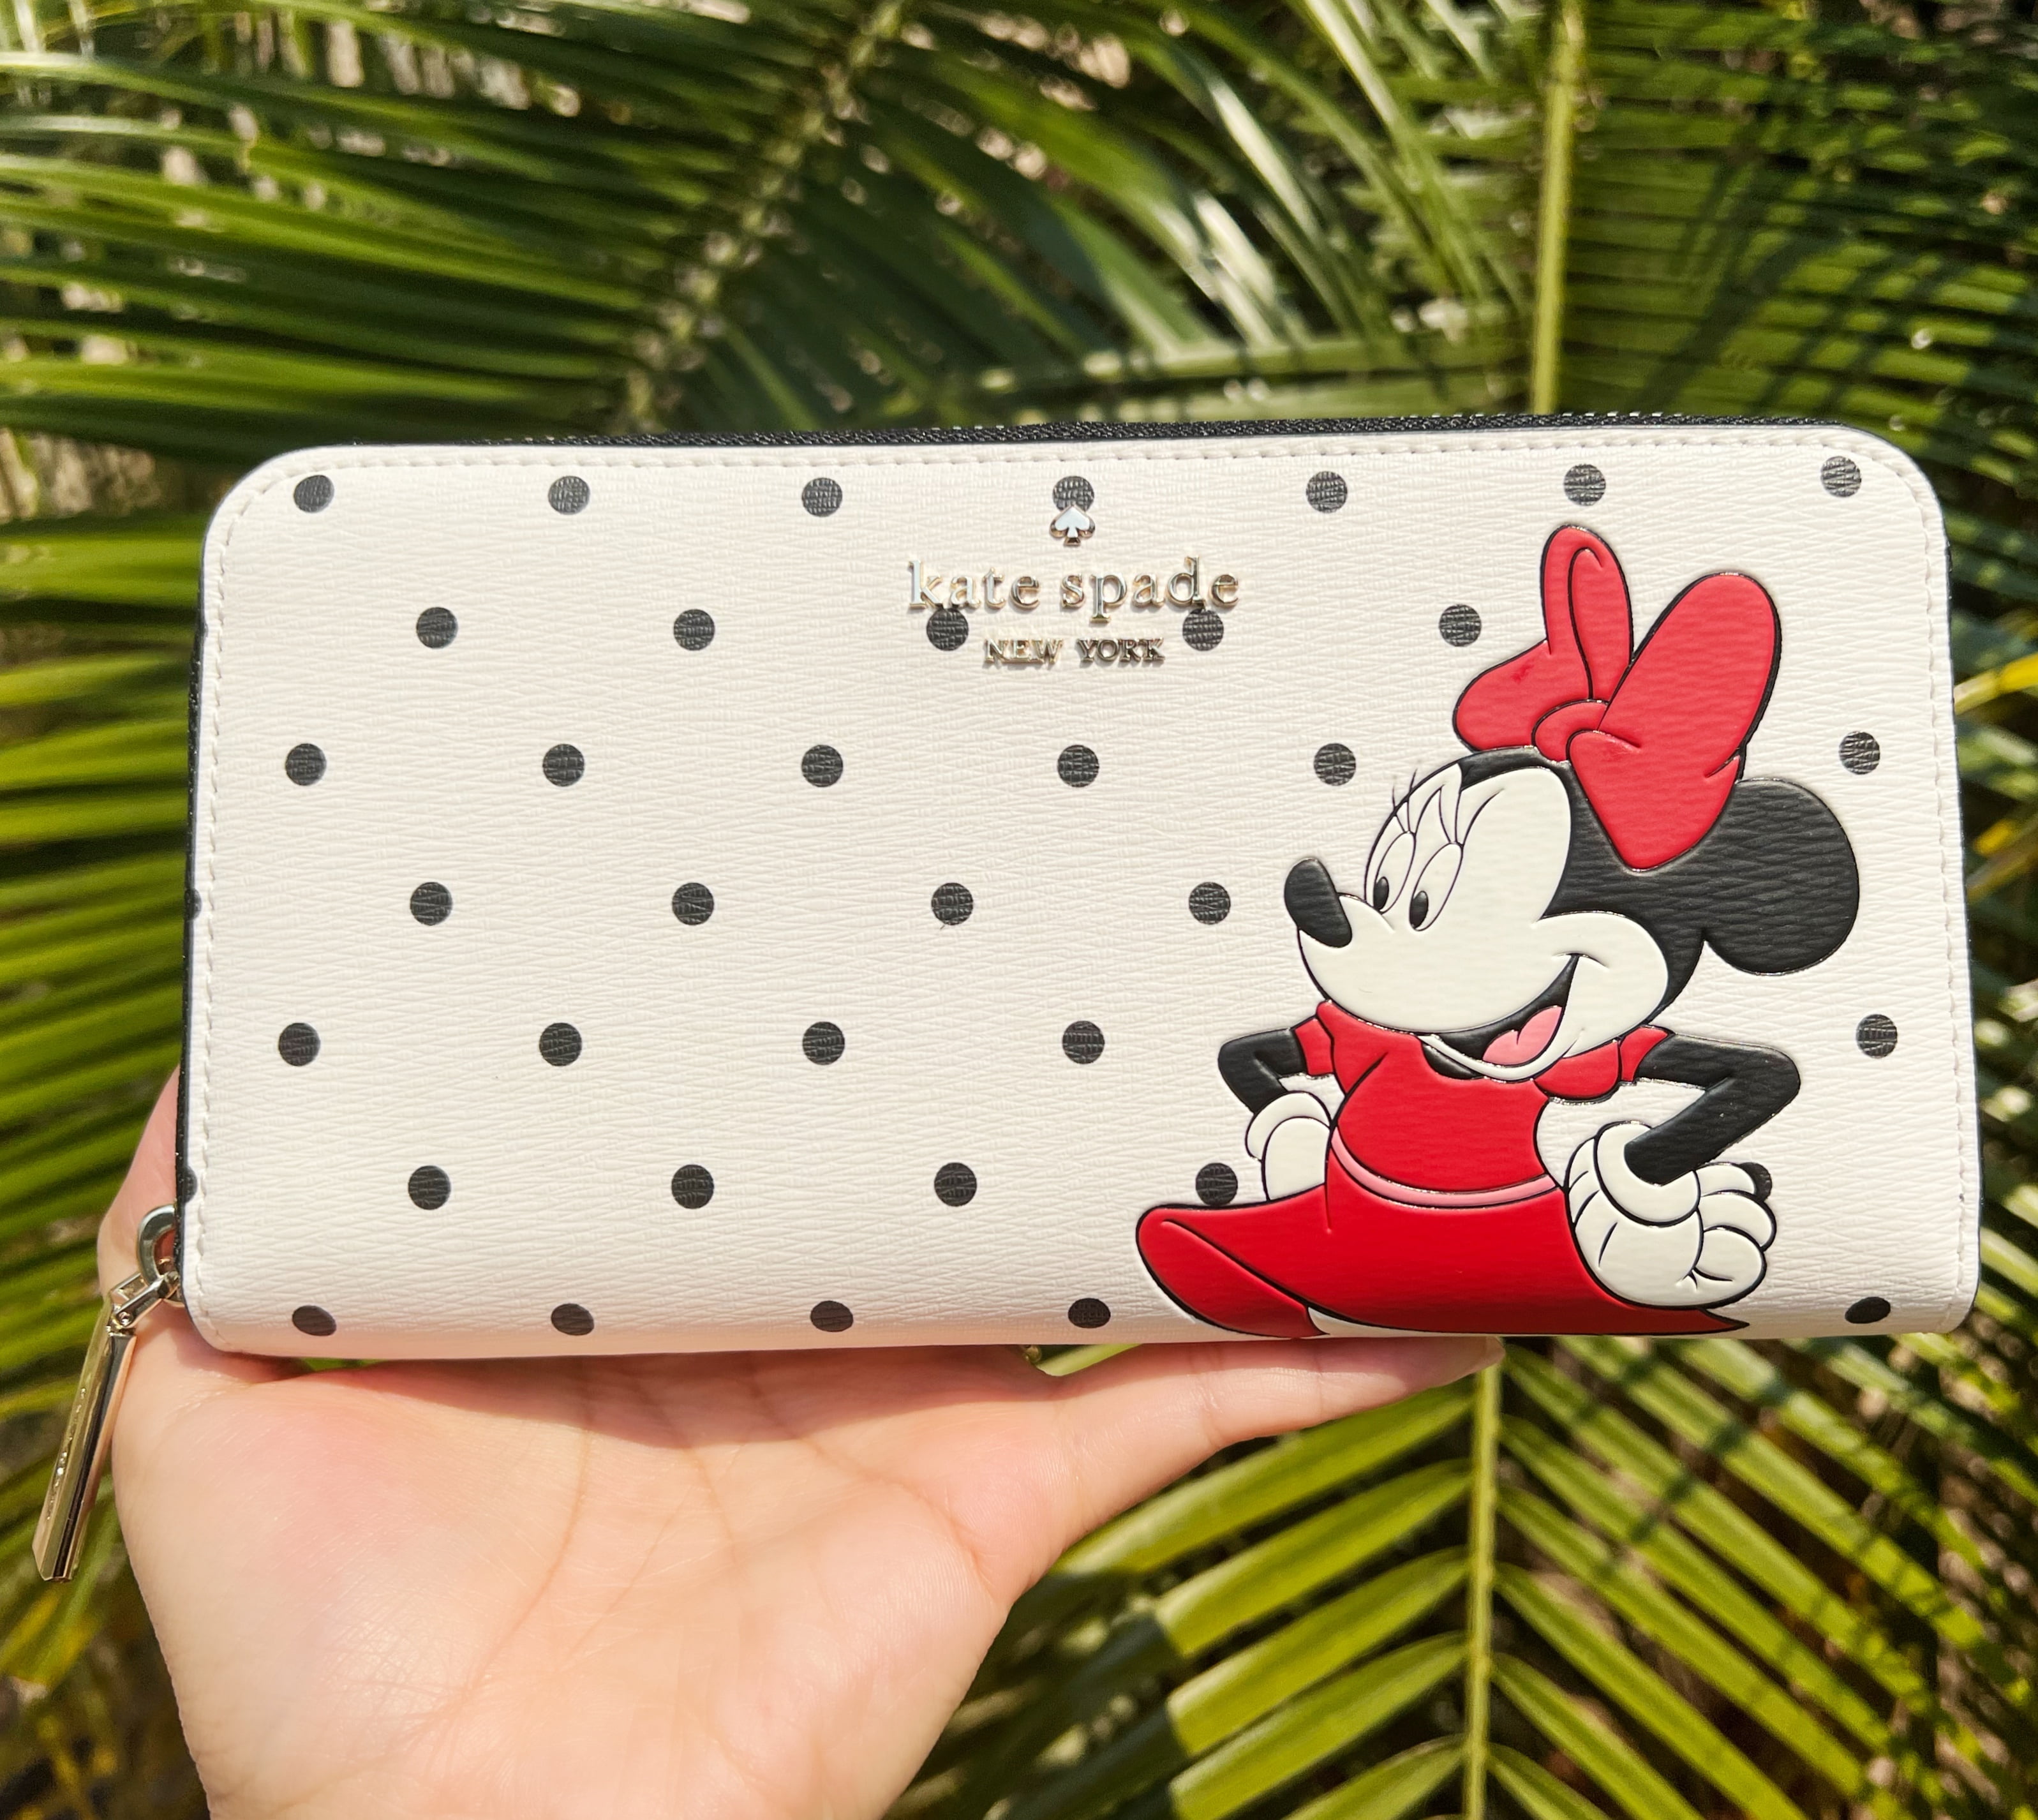 Disney Minnie Mouse Vintage Polka Dot Zip Around Wallet